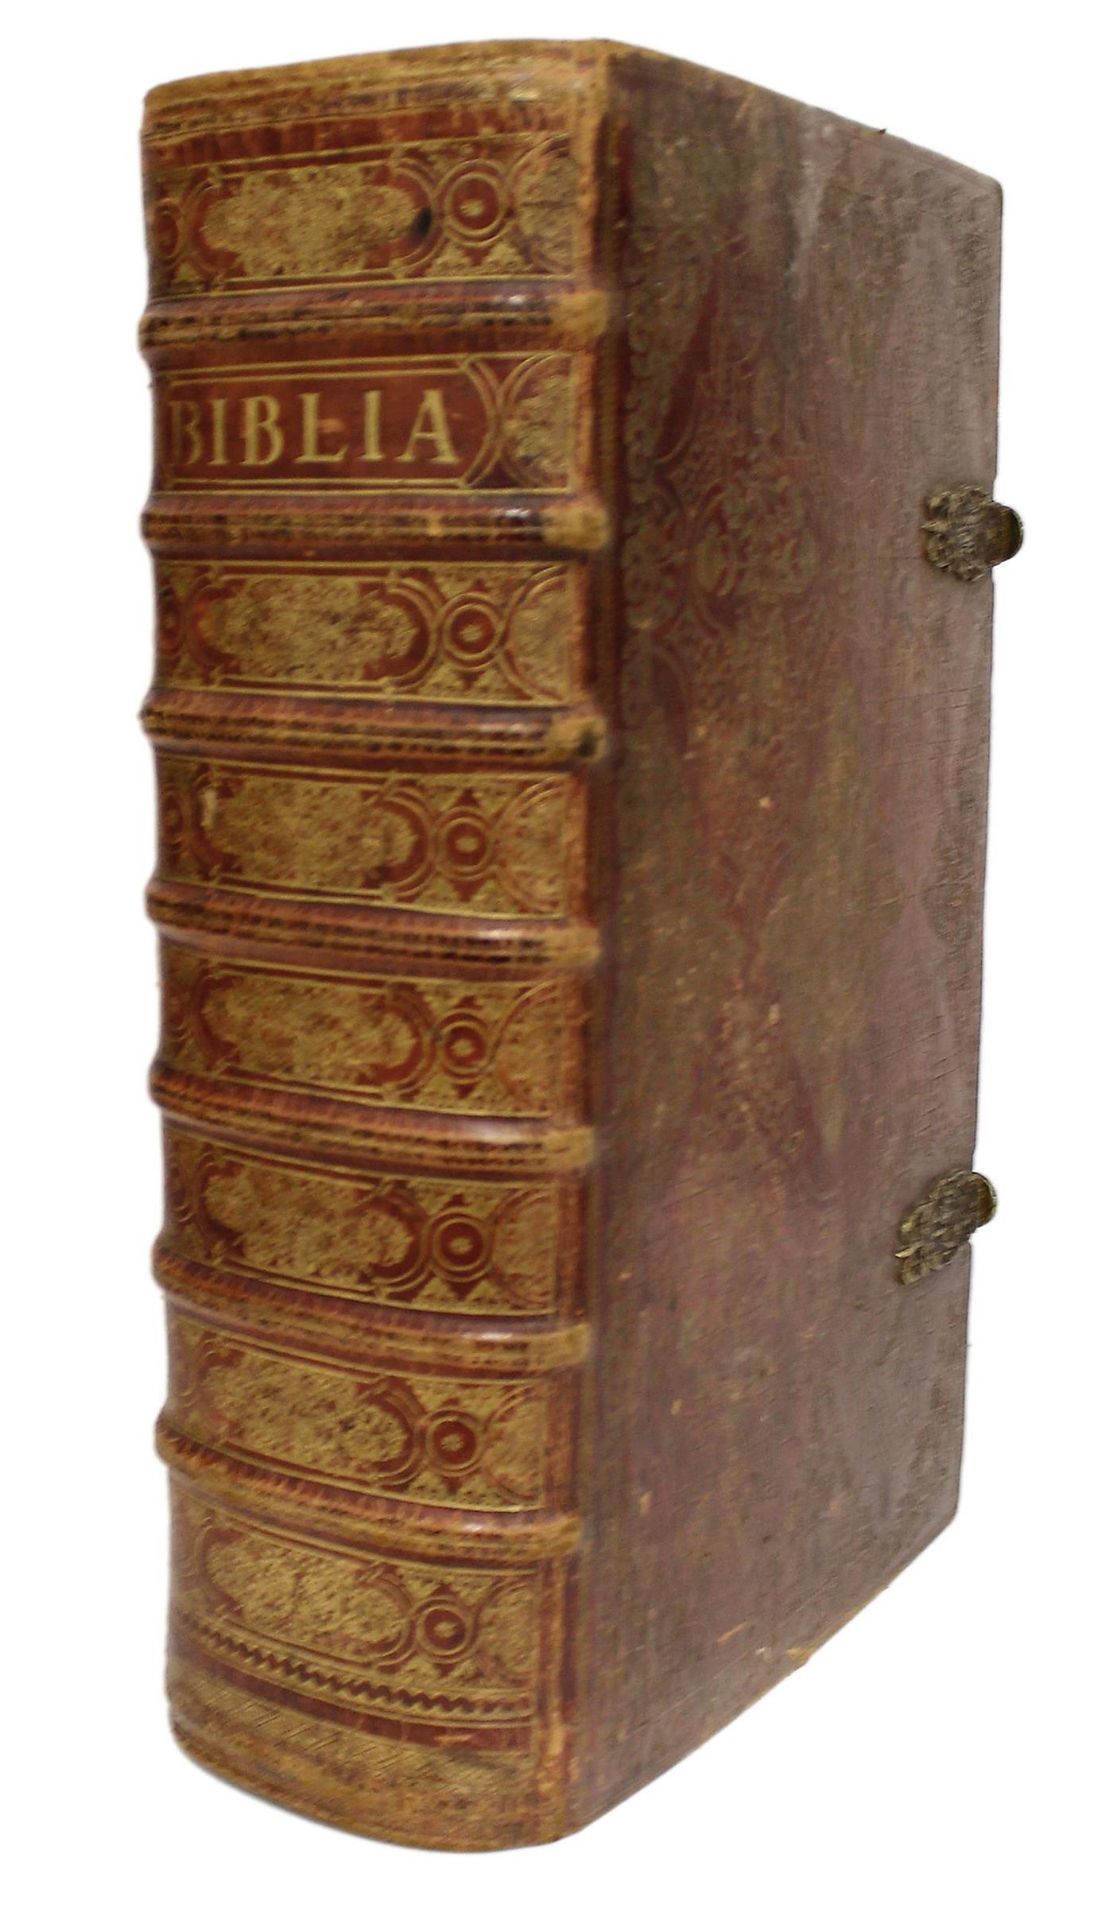 Biblia germanica. - Image 2 of 4